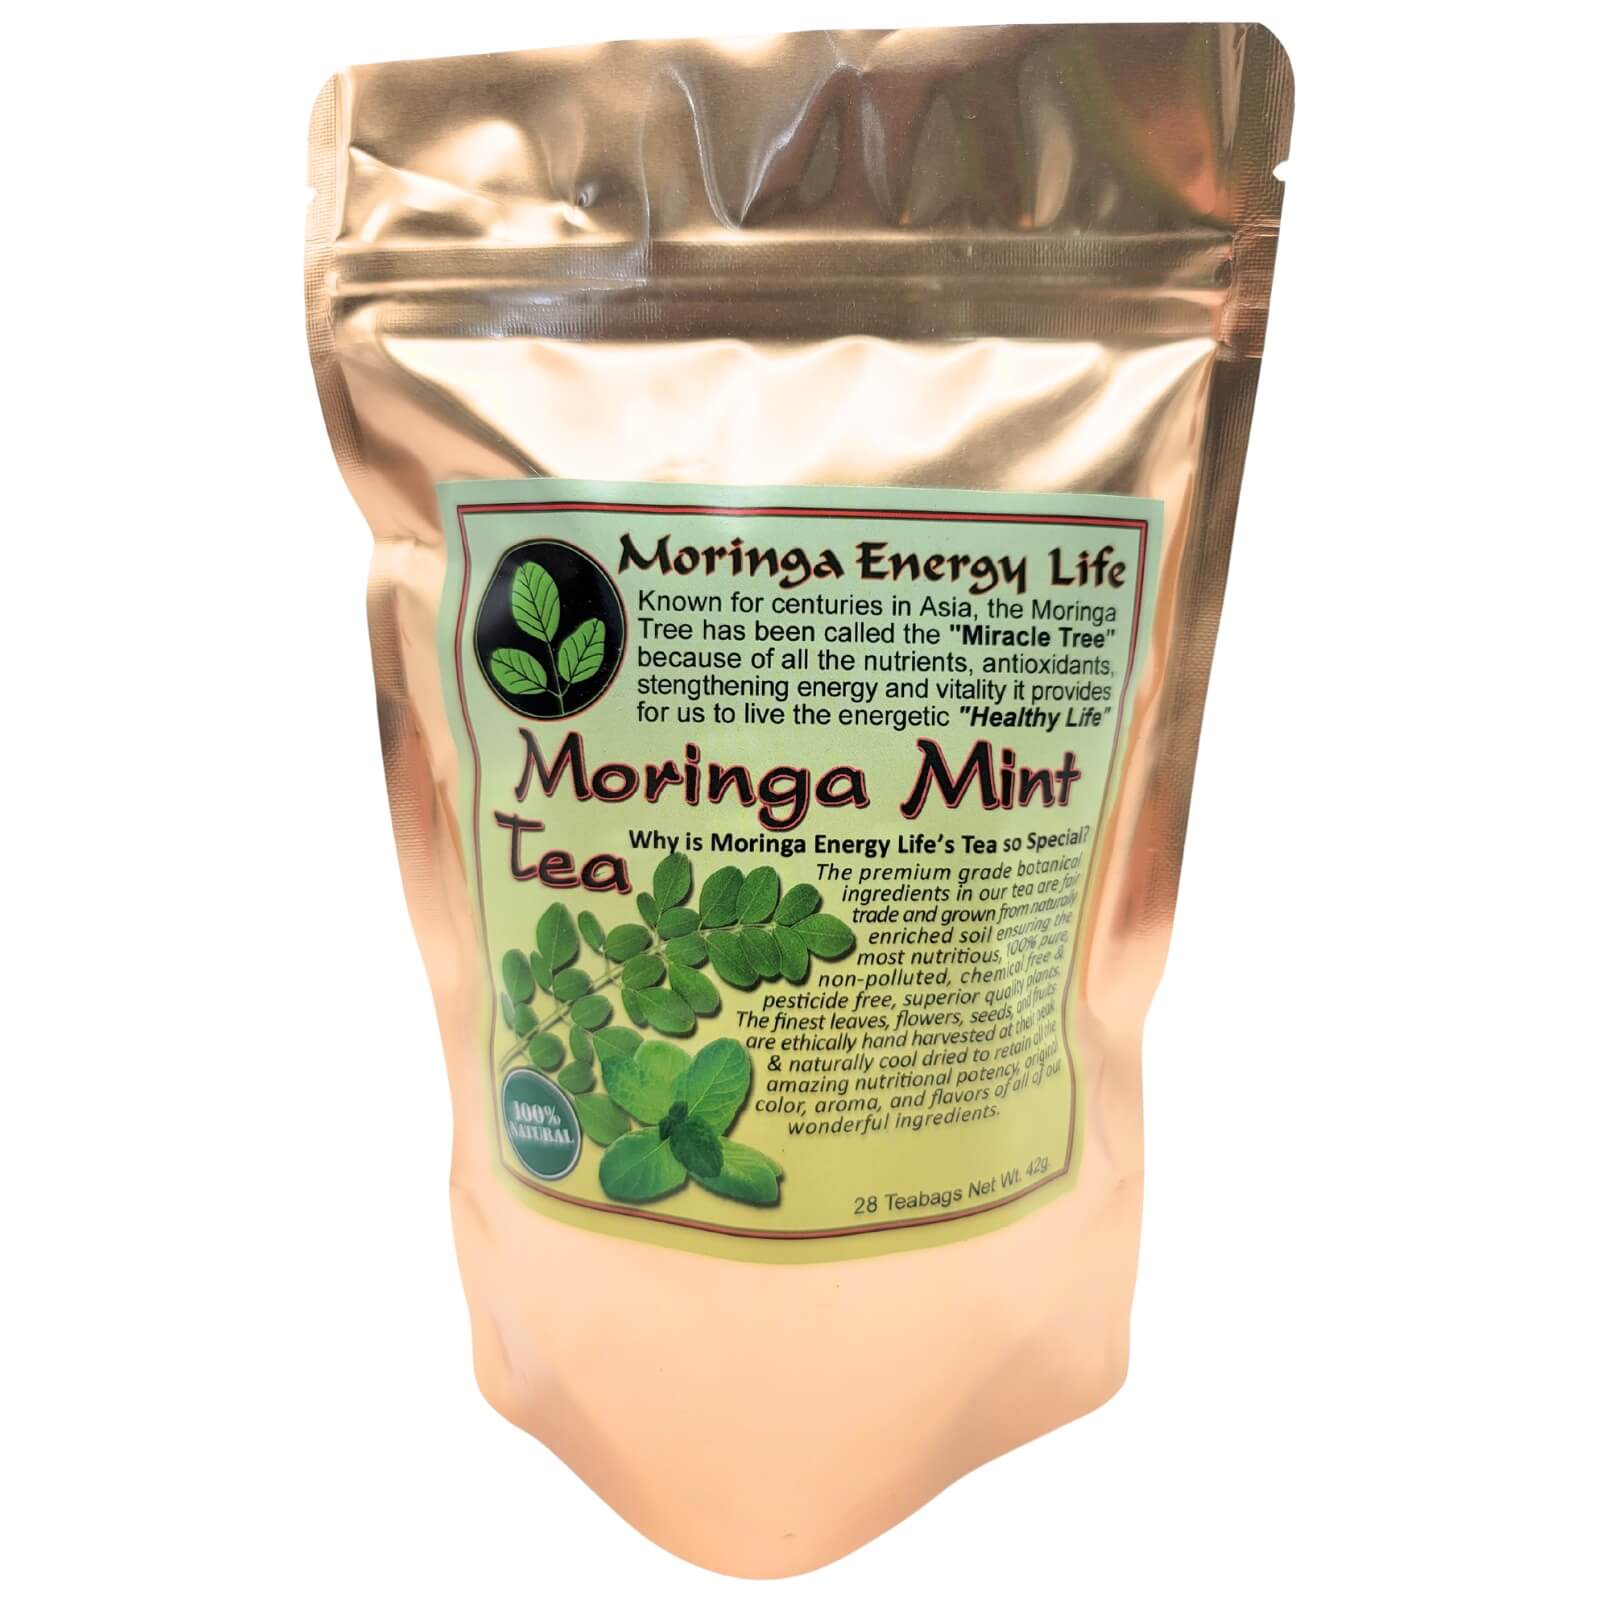 Moringa Mint Tea Bags by Moringa Energy Life, 28 Herbal Teas - image 1 of 5